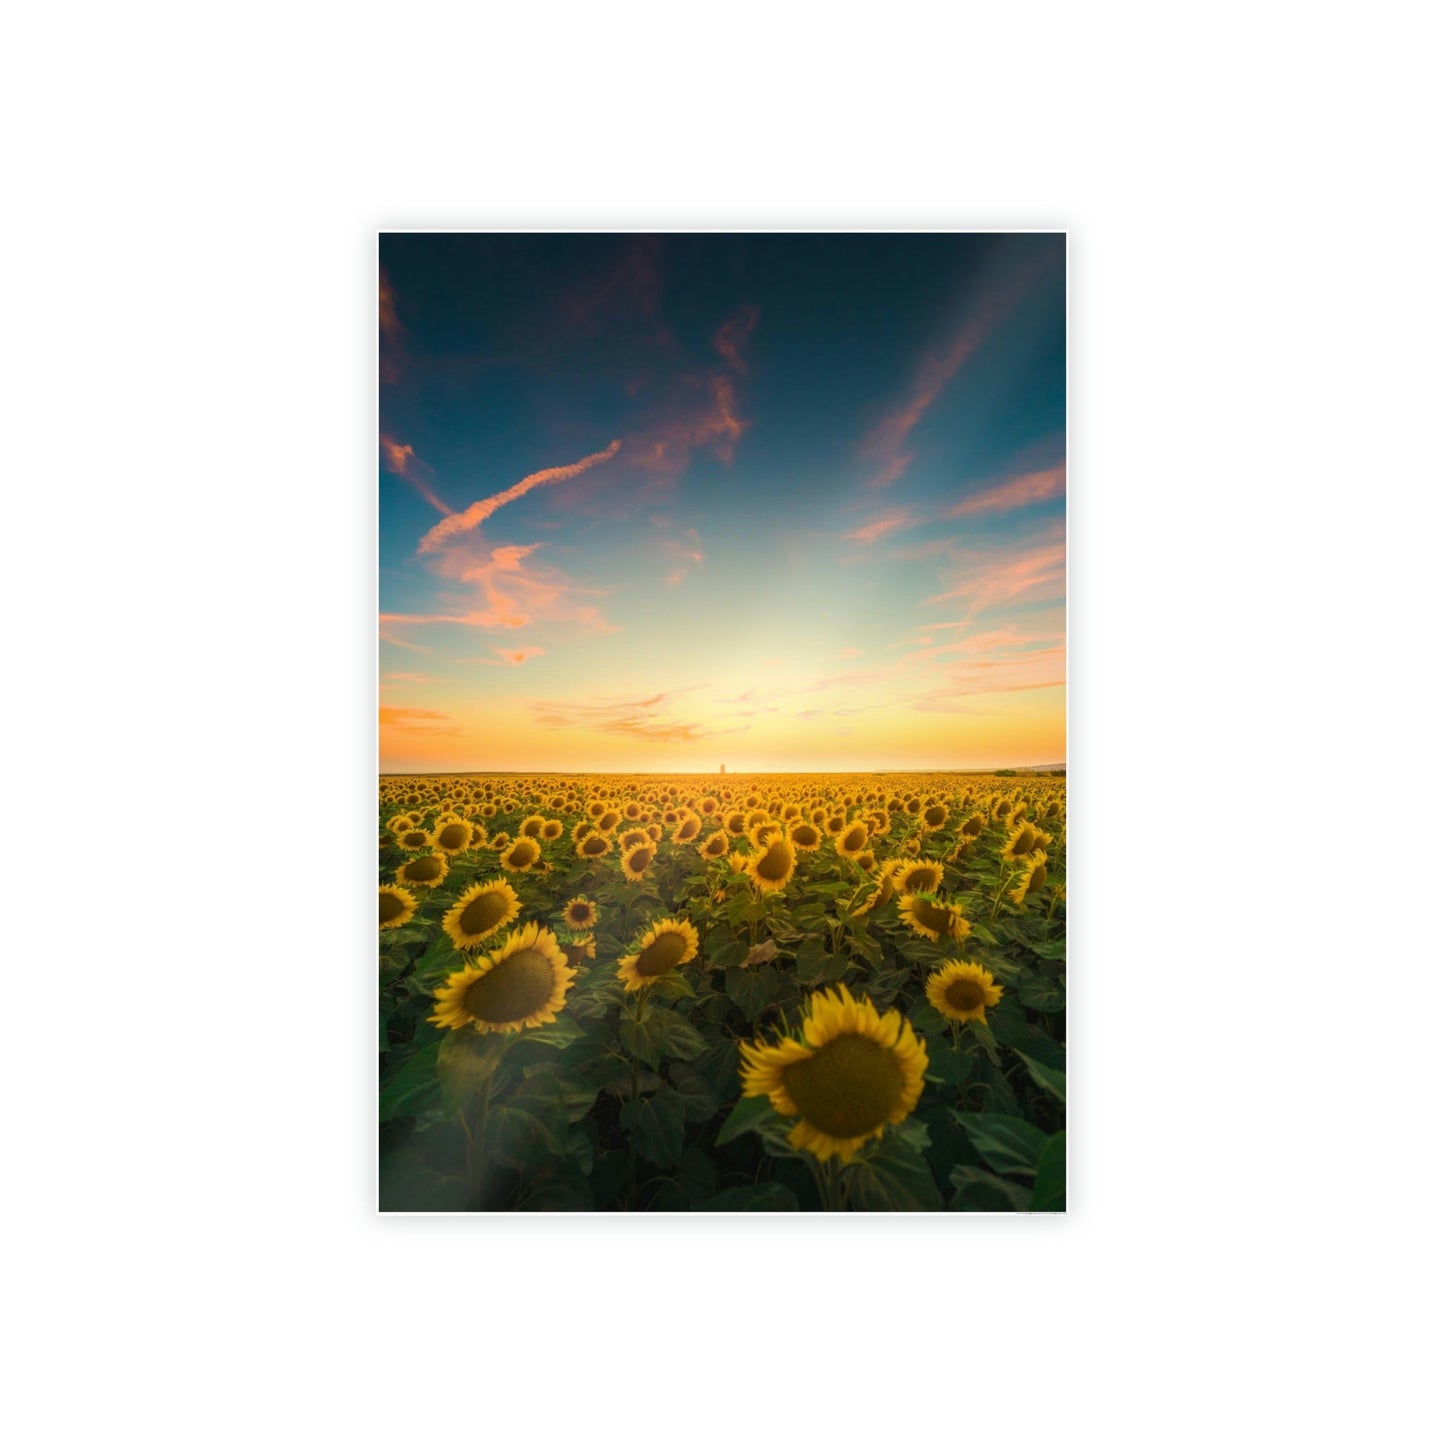 Radiant Rays: A Mesmerizing and Luminous Portrait of Sunflowers' Glory